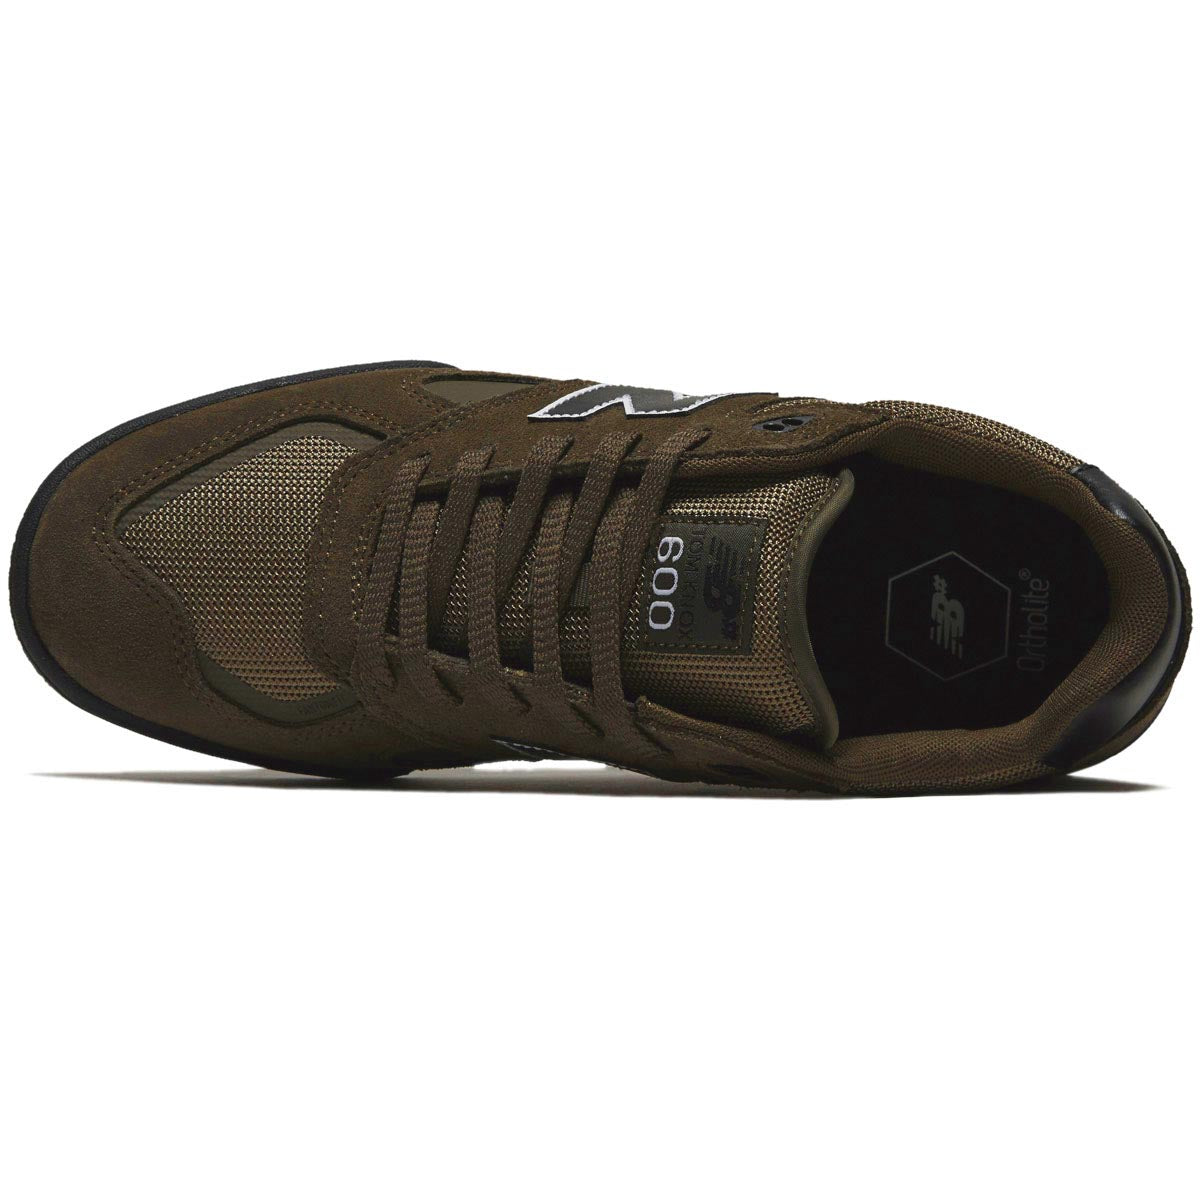 New Balance 600 Tom Knox Shoes - Olive/Black image 3